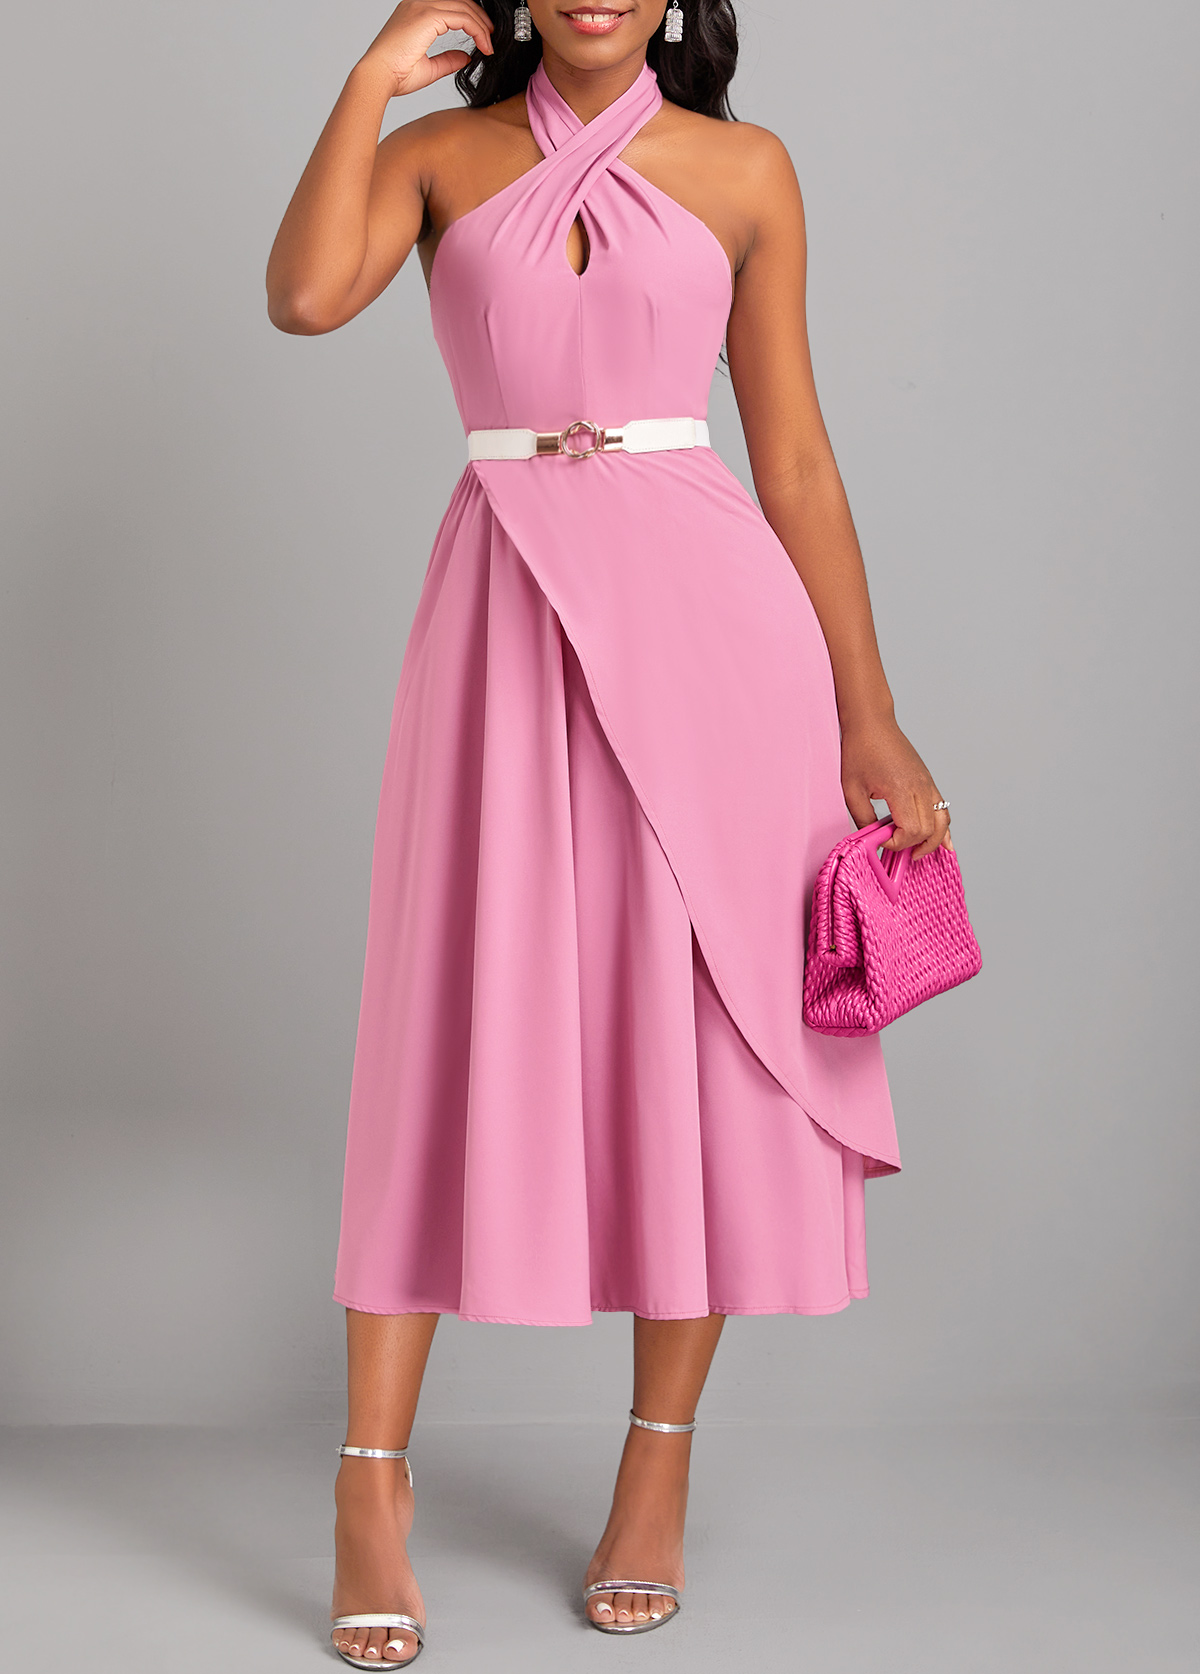 ROTITA Criss Cross Pink Layered Sleeveless Dress